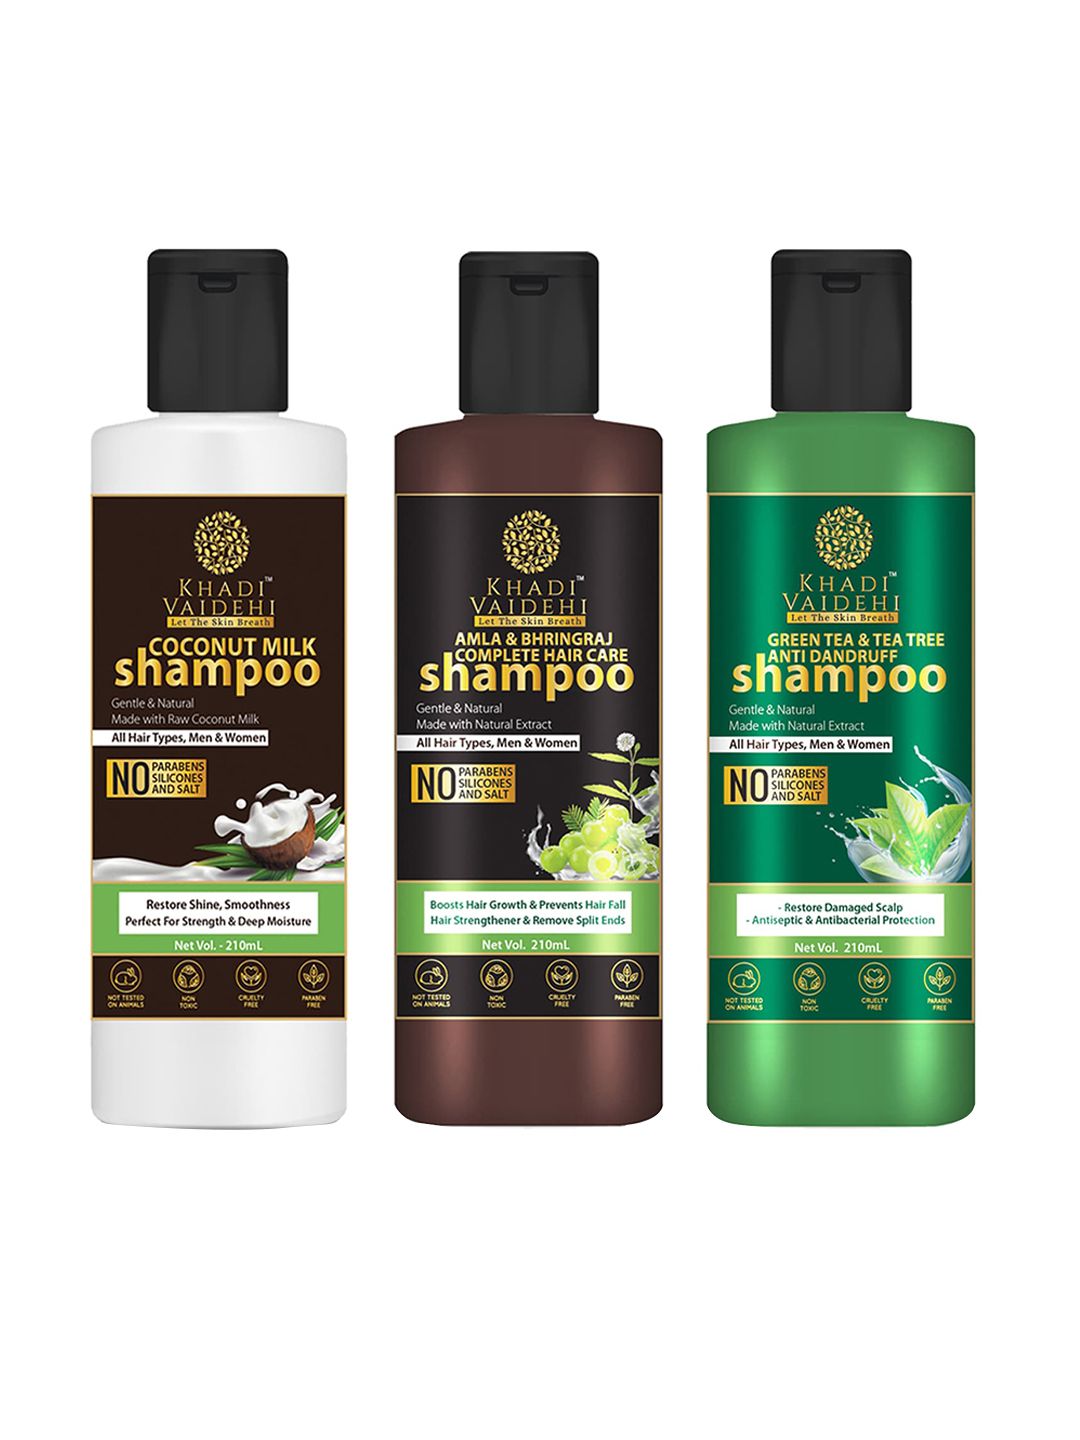 Khadi Vaidehi Set of 3 Paraben-Free Shampoos for All Hair Types - 210ml each Price in India